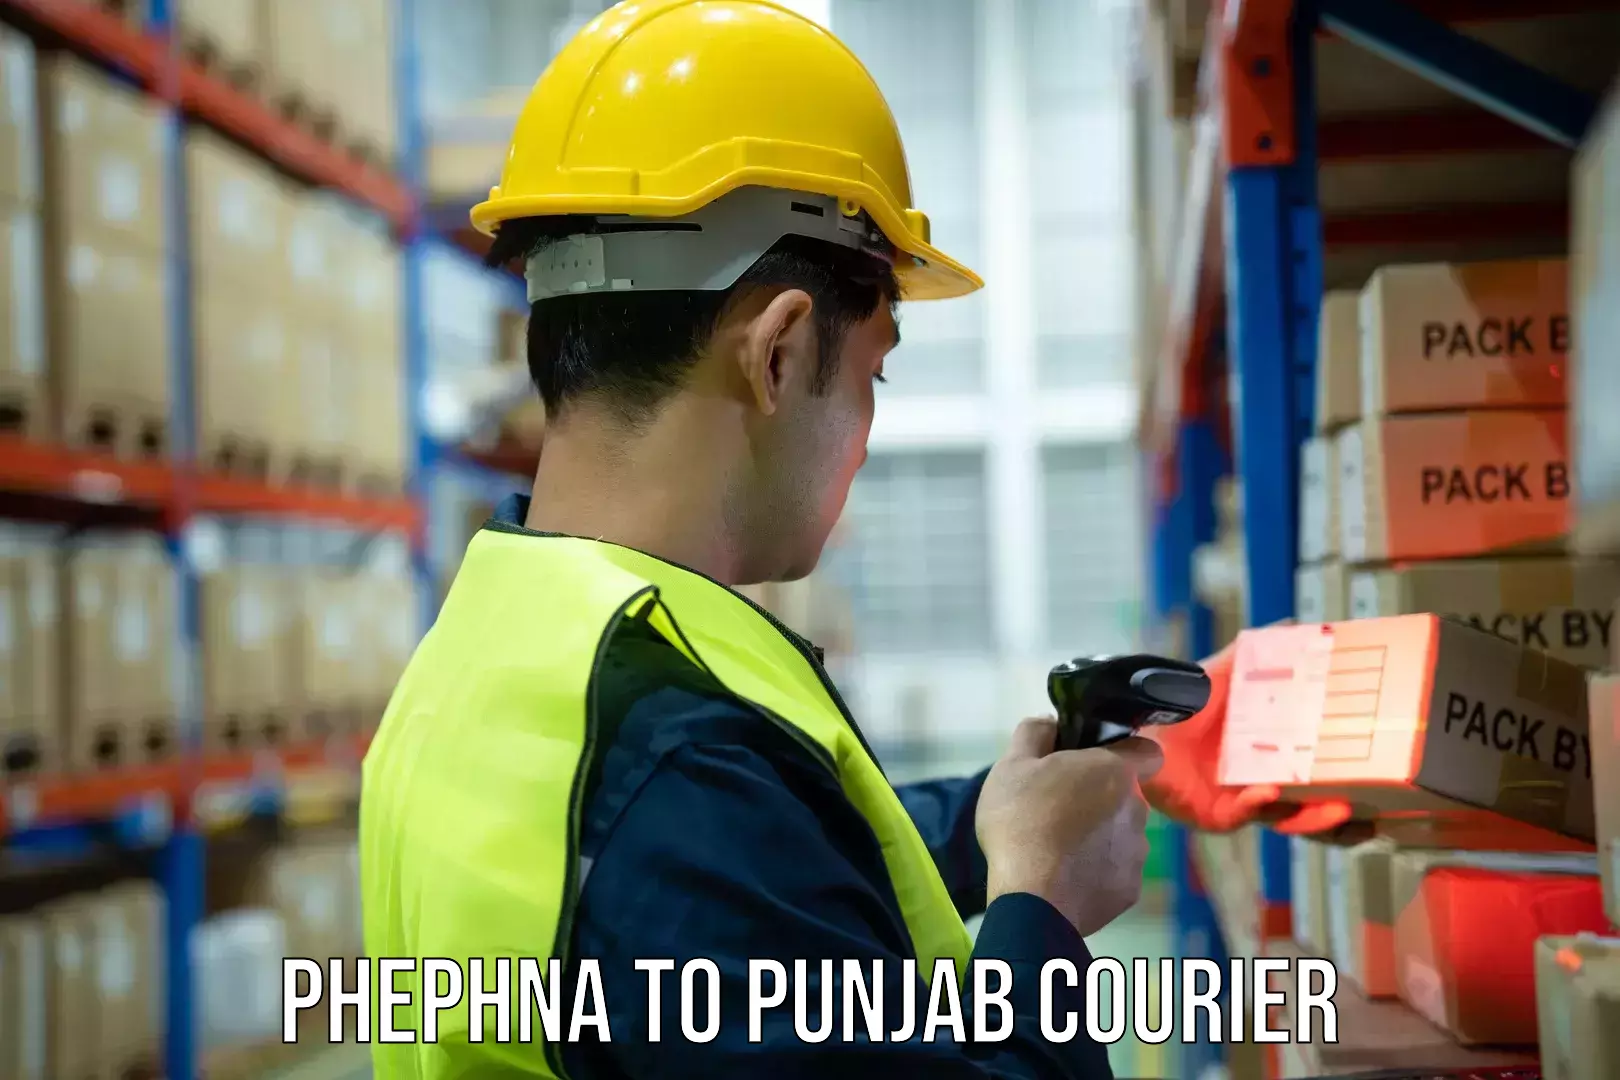 On-demand delivery Phephna to Punjab